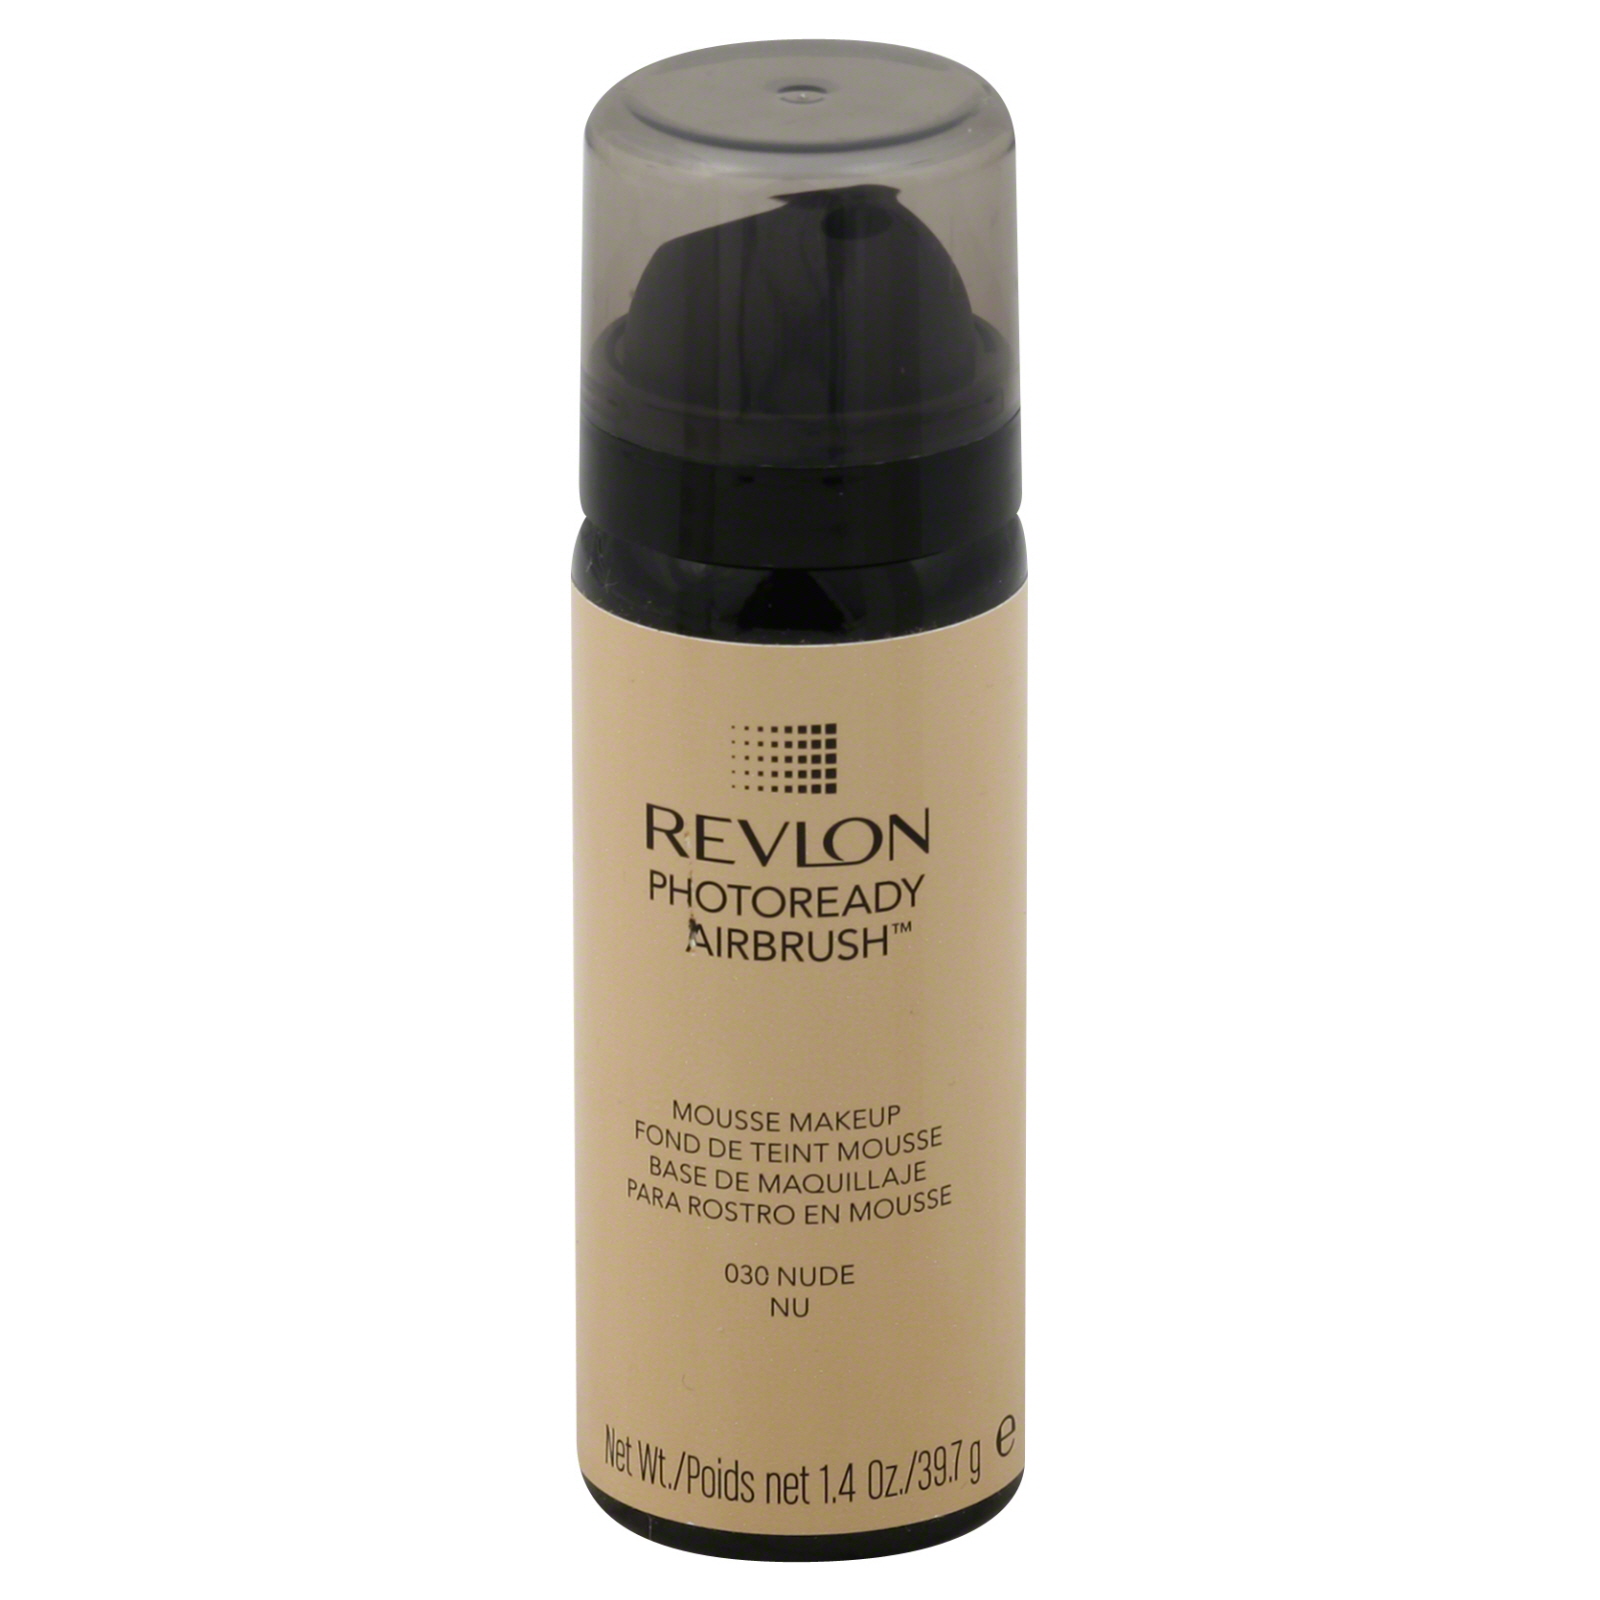 Revlon Photoready Airbrush Mousse Makeup Nude 1.4 fl oz